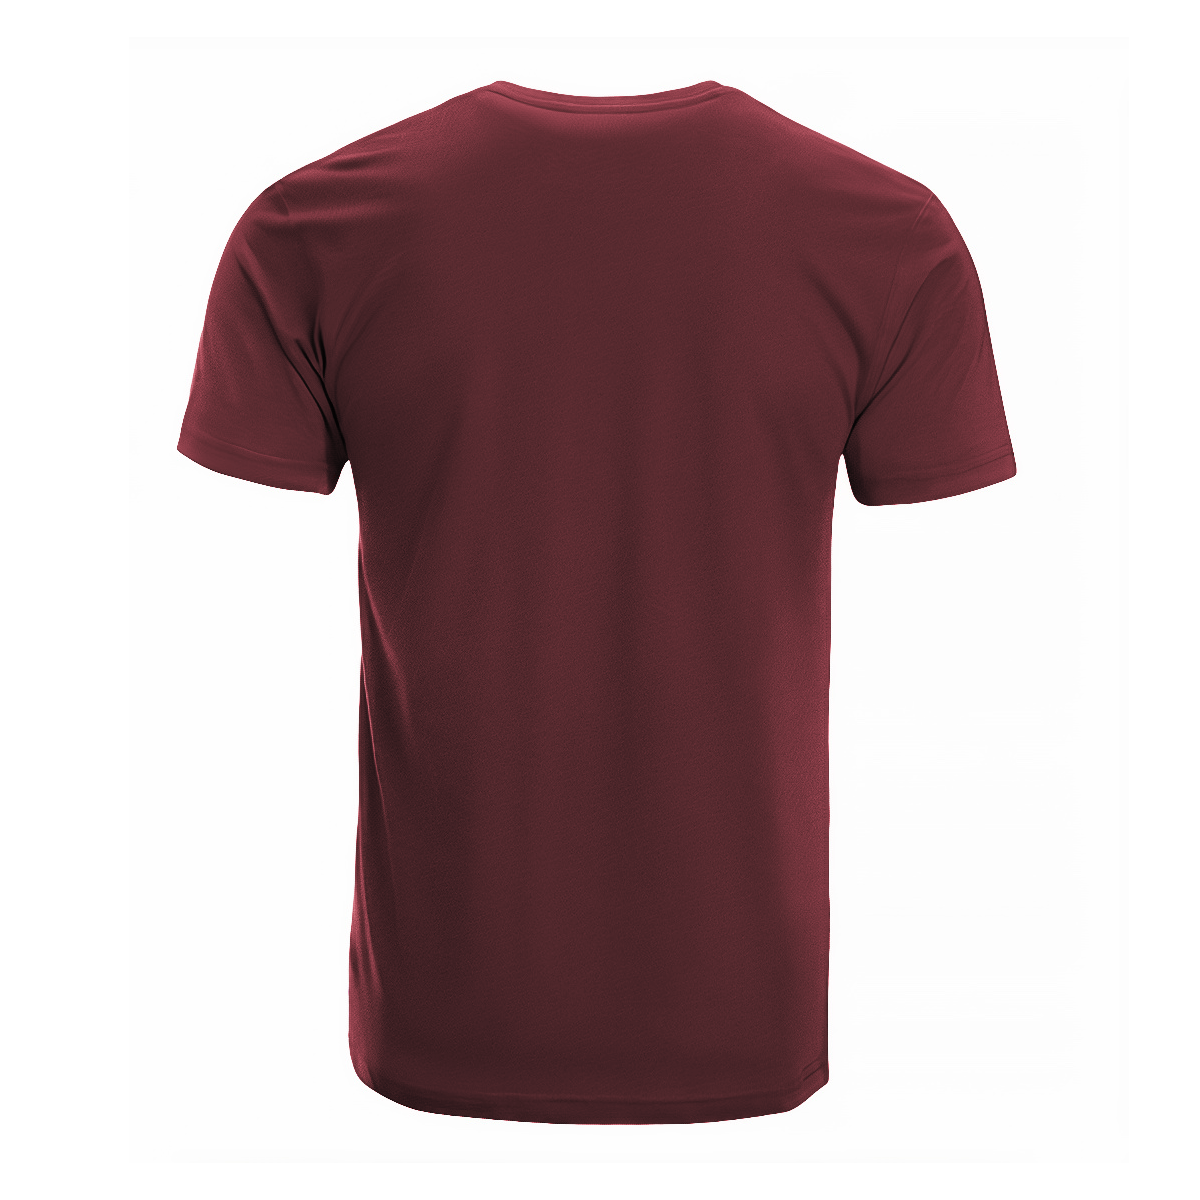 Keith Tartan Crest T-shirt - I'm not yelling style